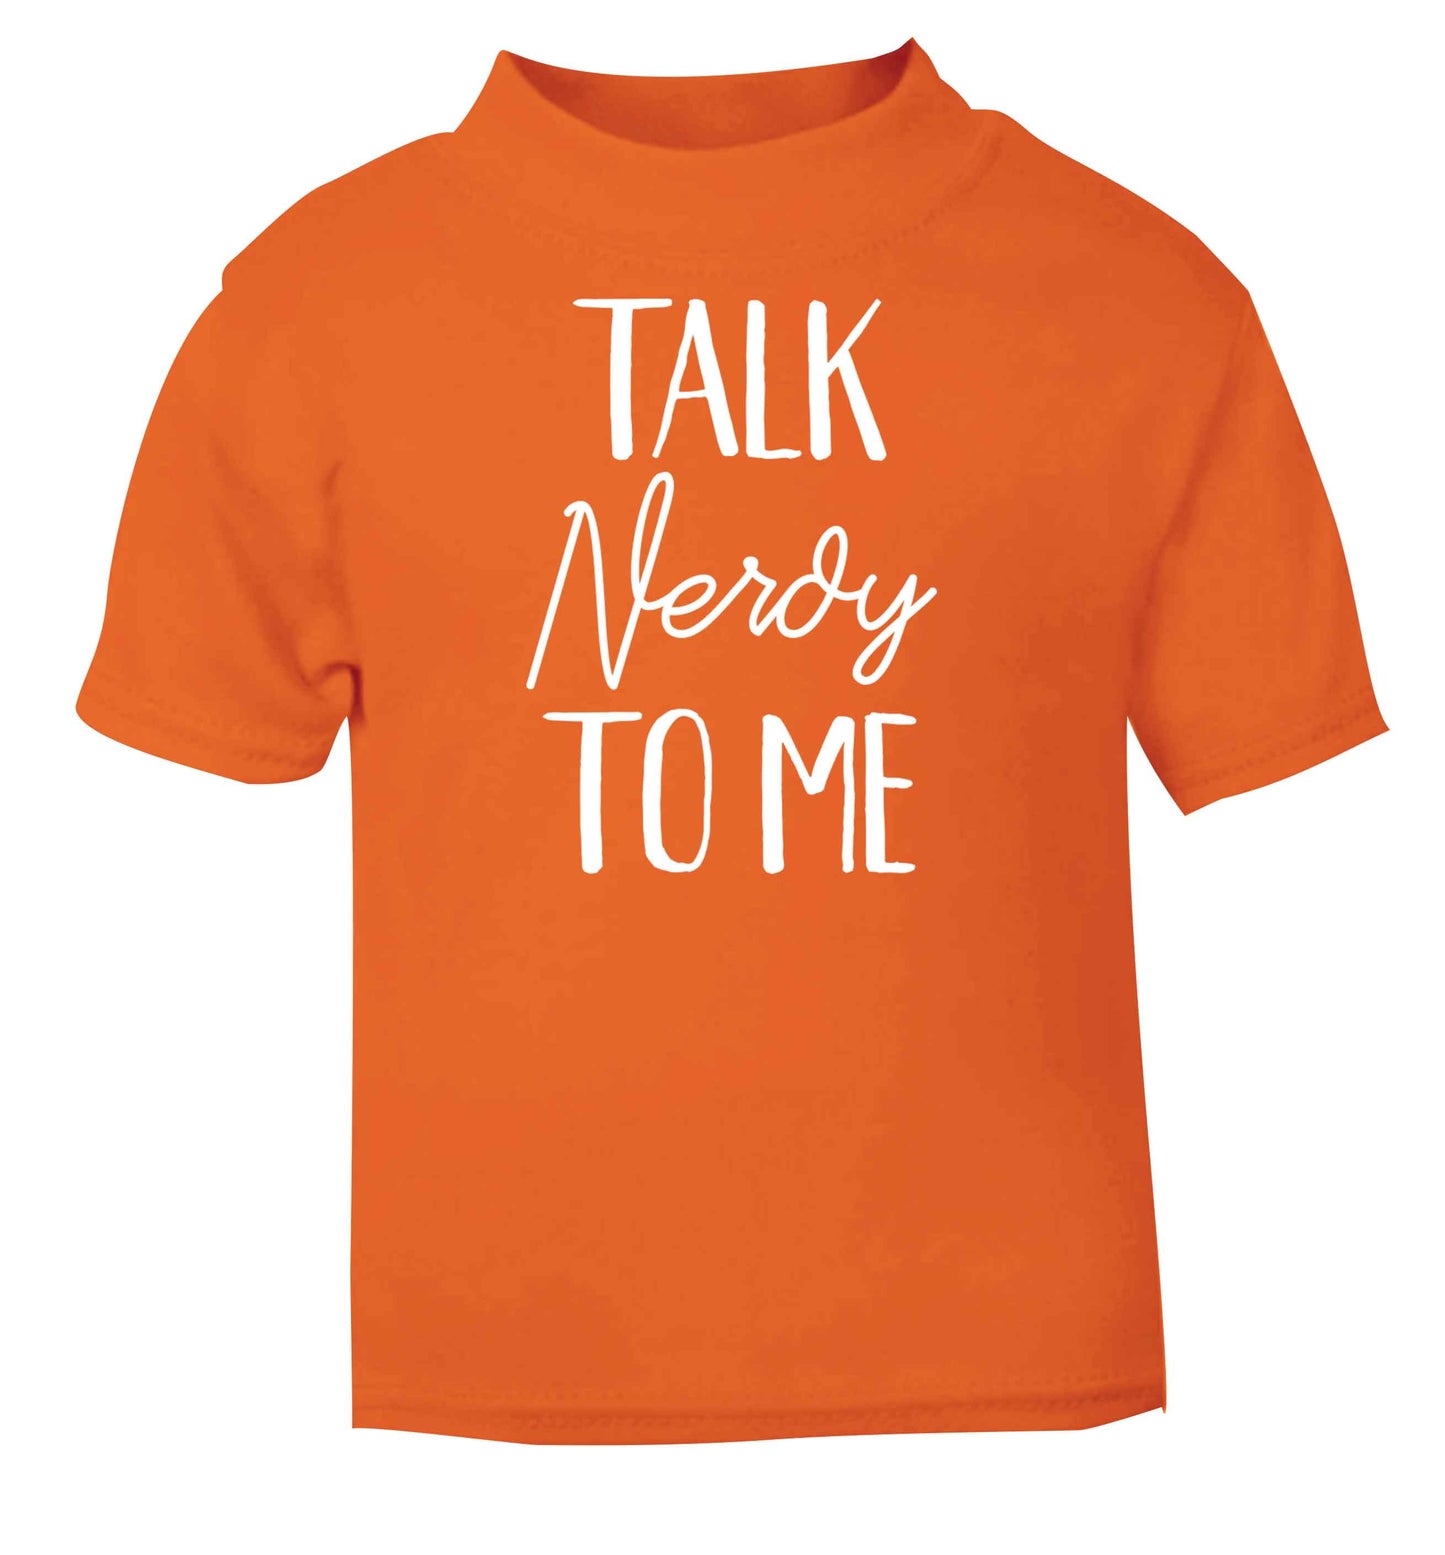 Talk nerdy to me orange baby toddler Tshirt 2 Years